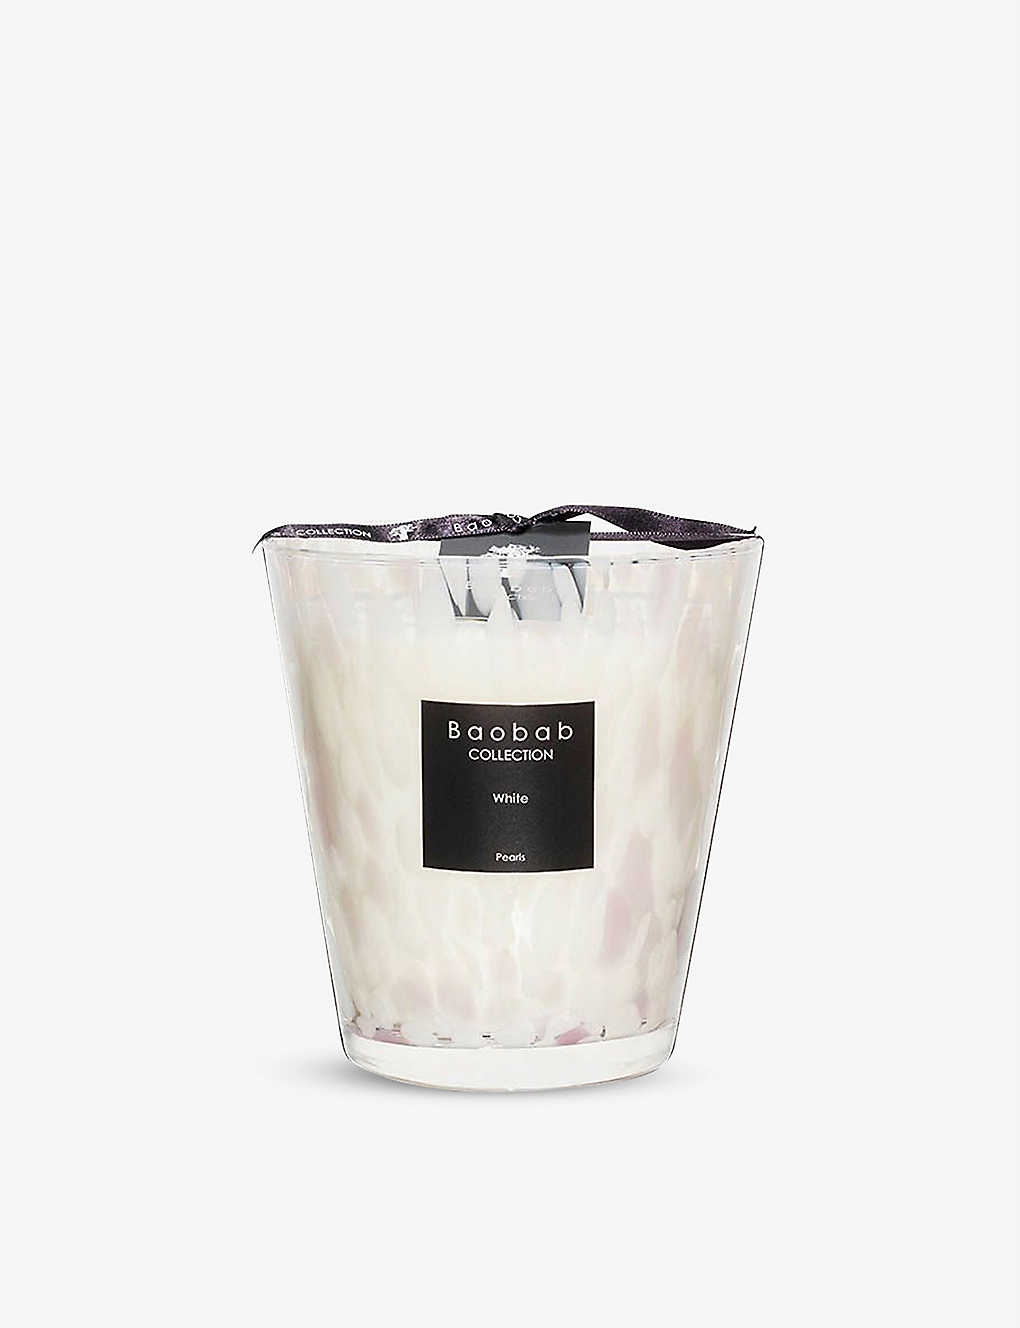 BAOBAB COLLECTION ホワイト パール センテッドキャンドル 1 White Pearl scented candle 1kg